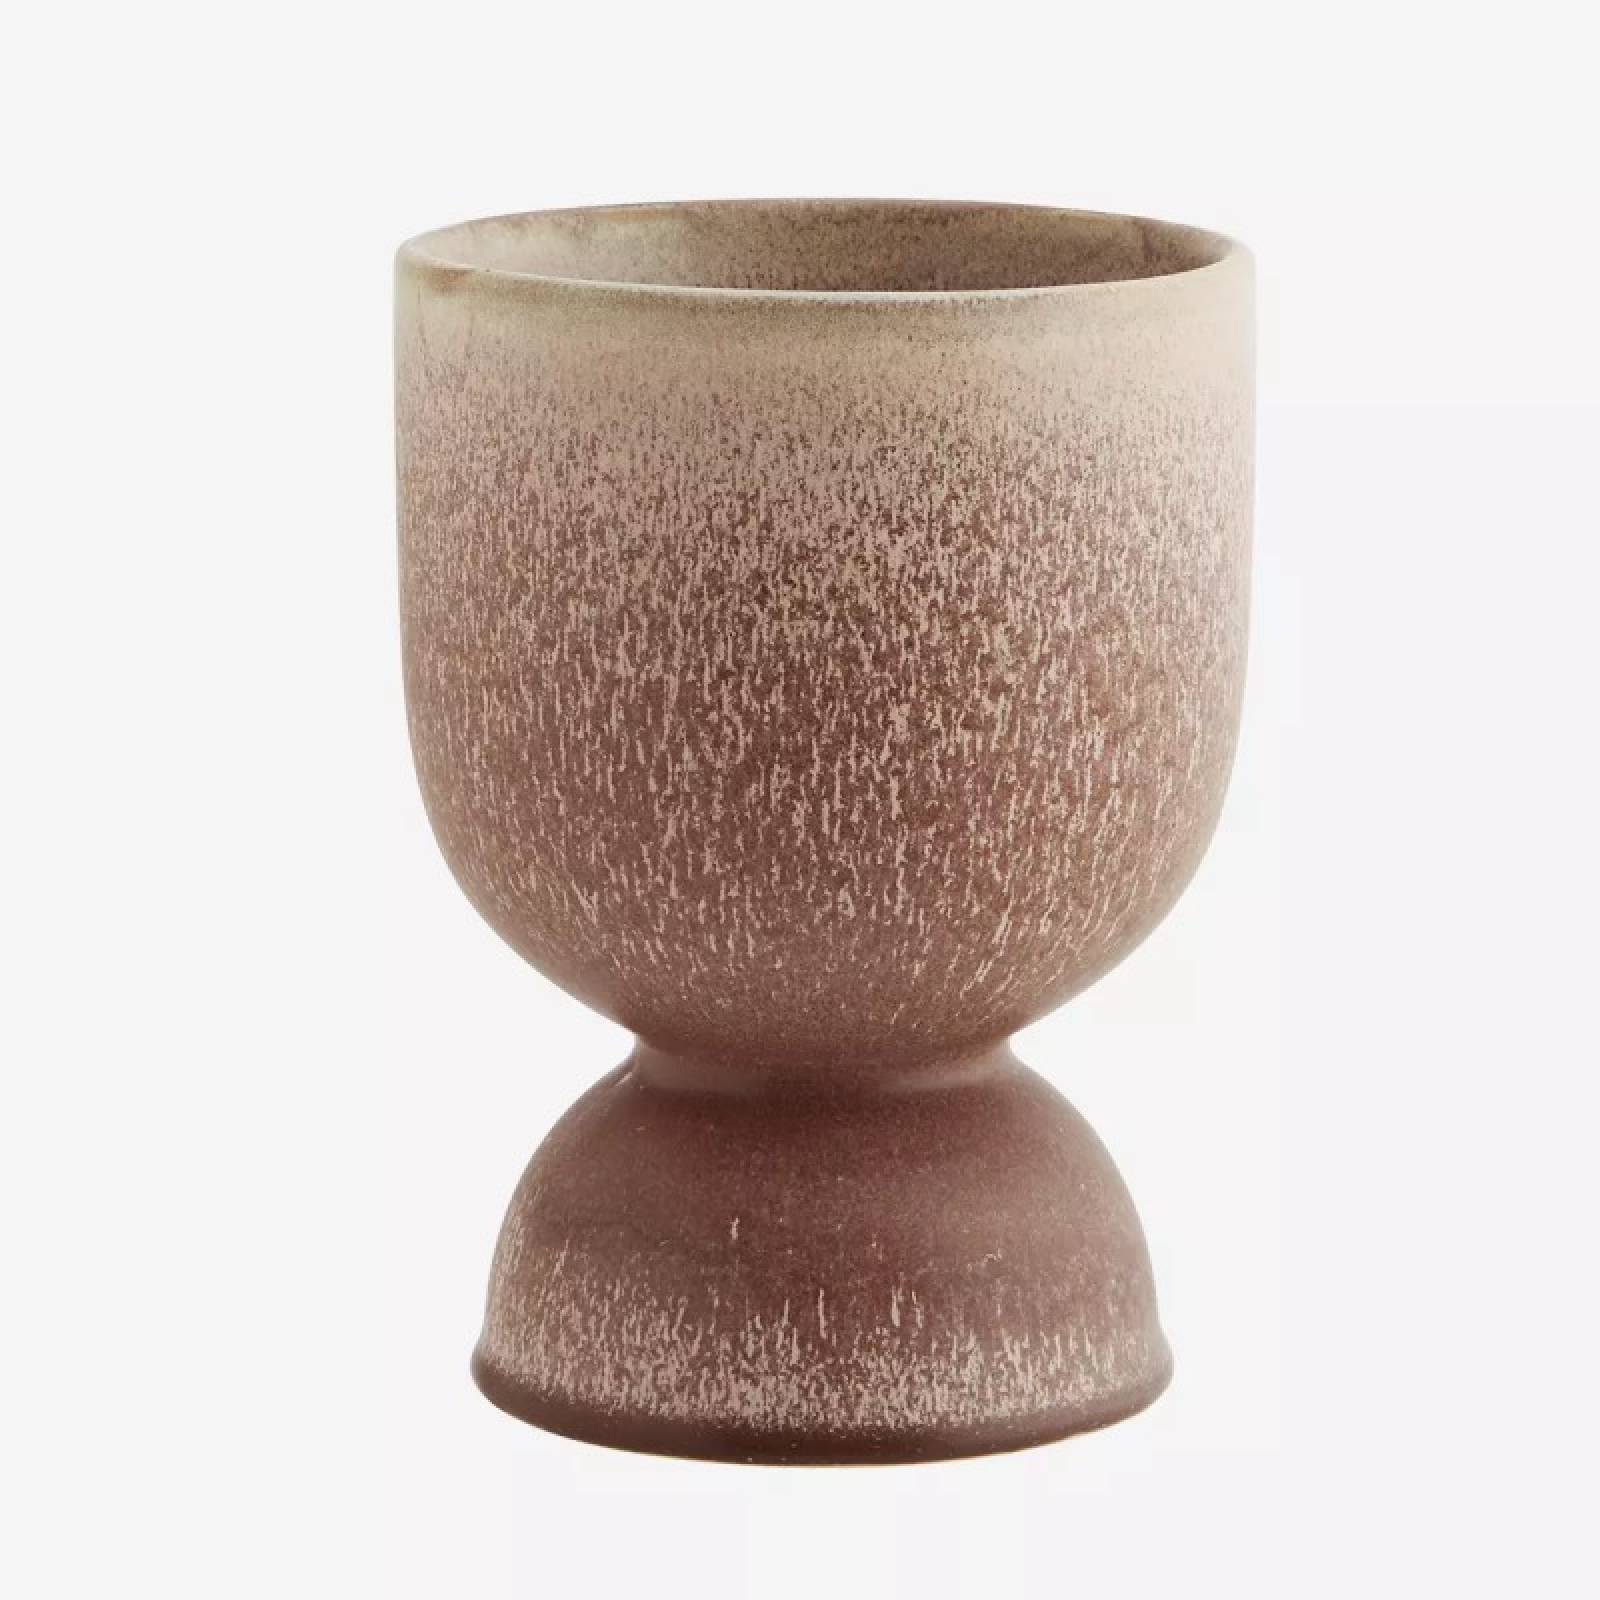 Urn Shaped Flower Pot On Plinth In Powder Brown H:19cm